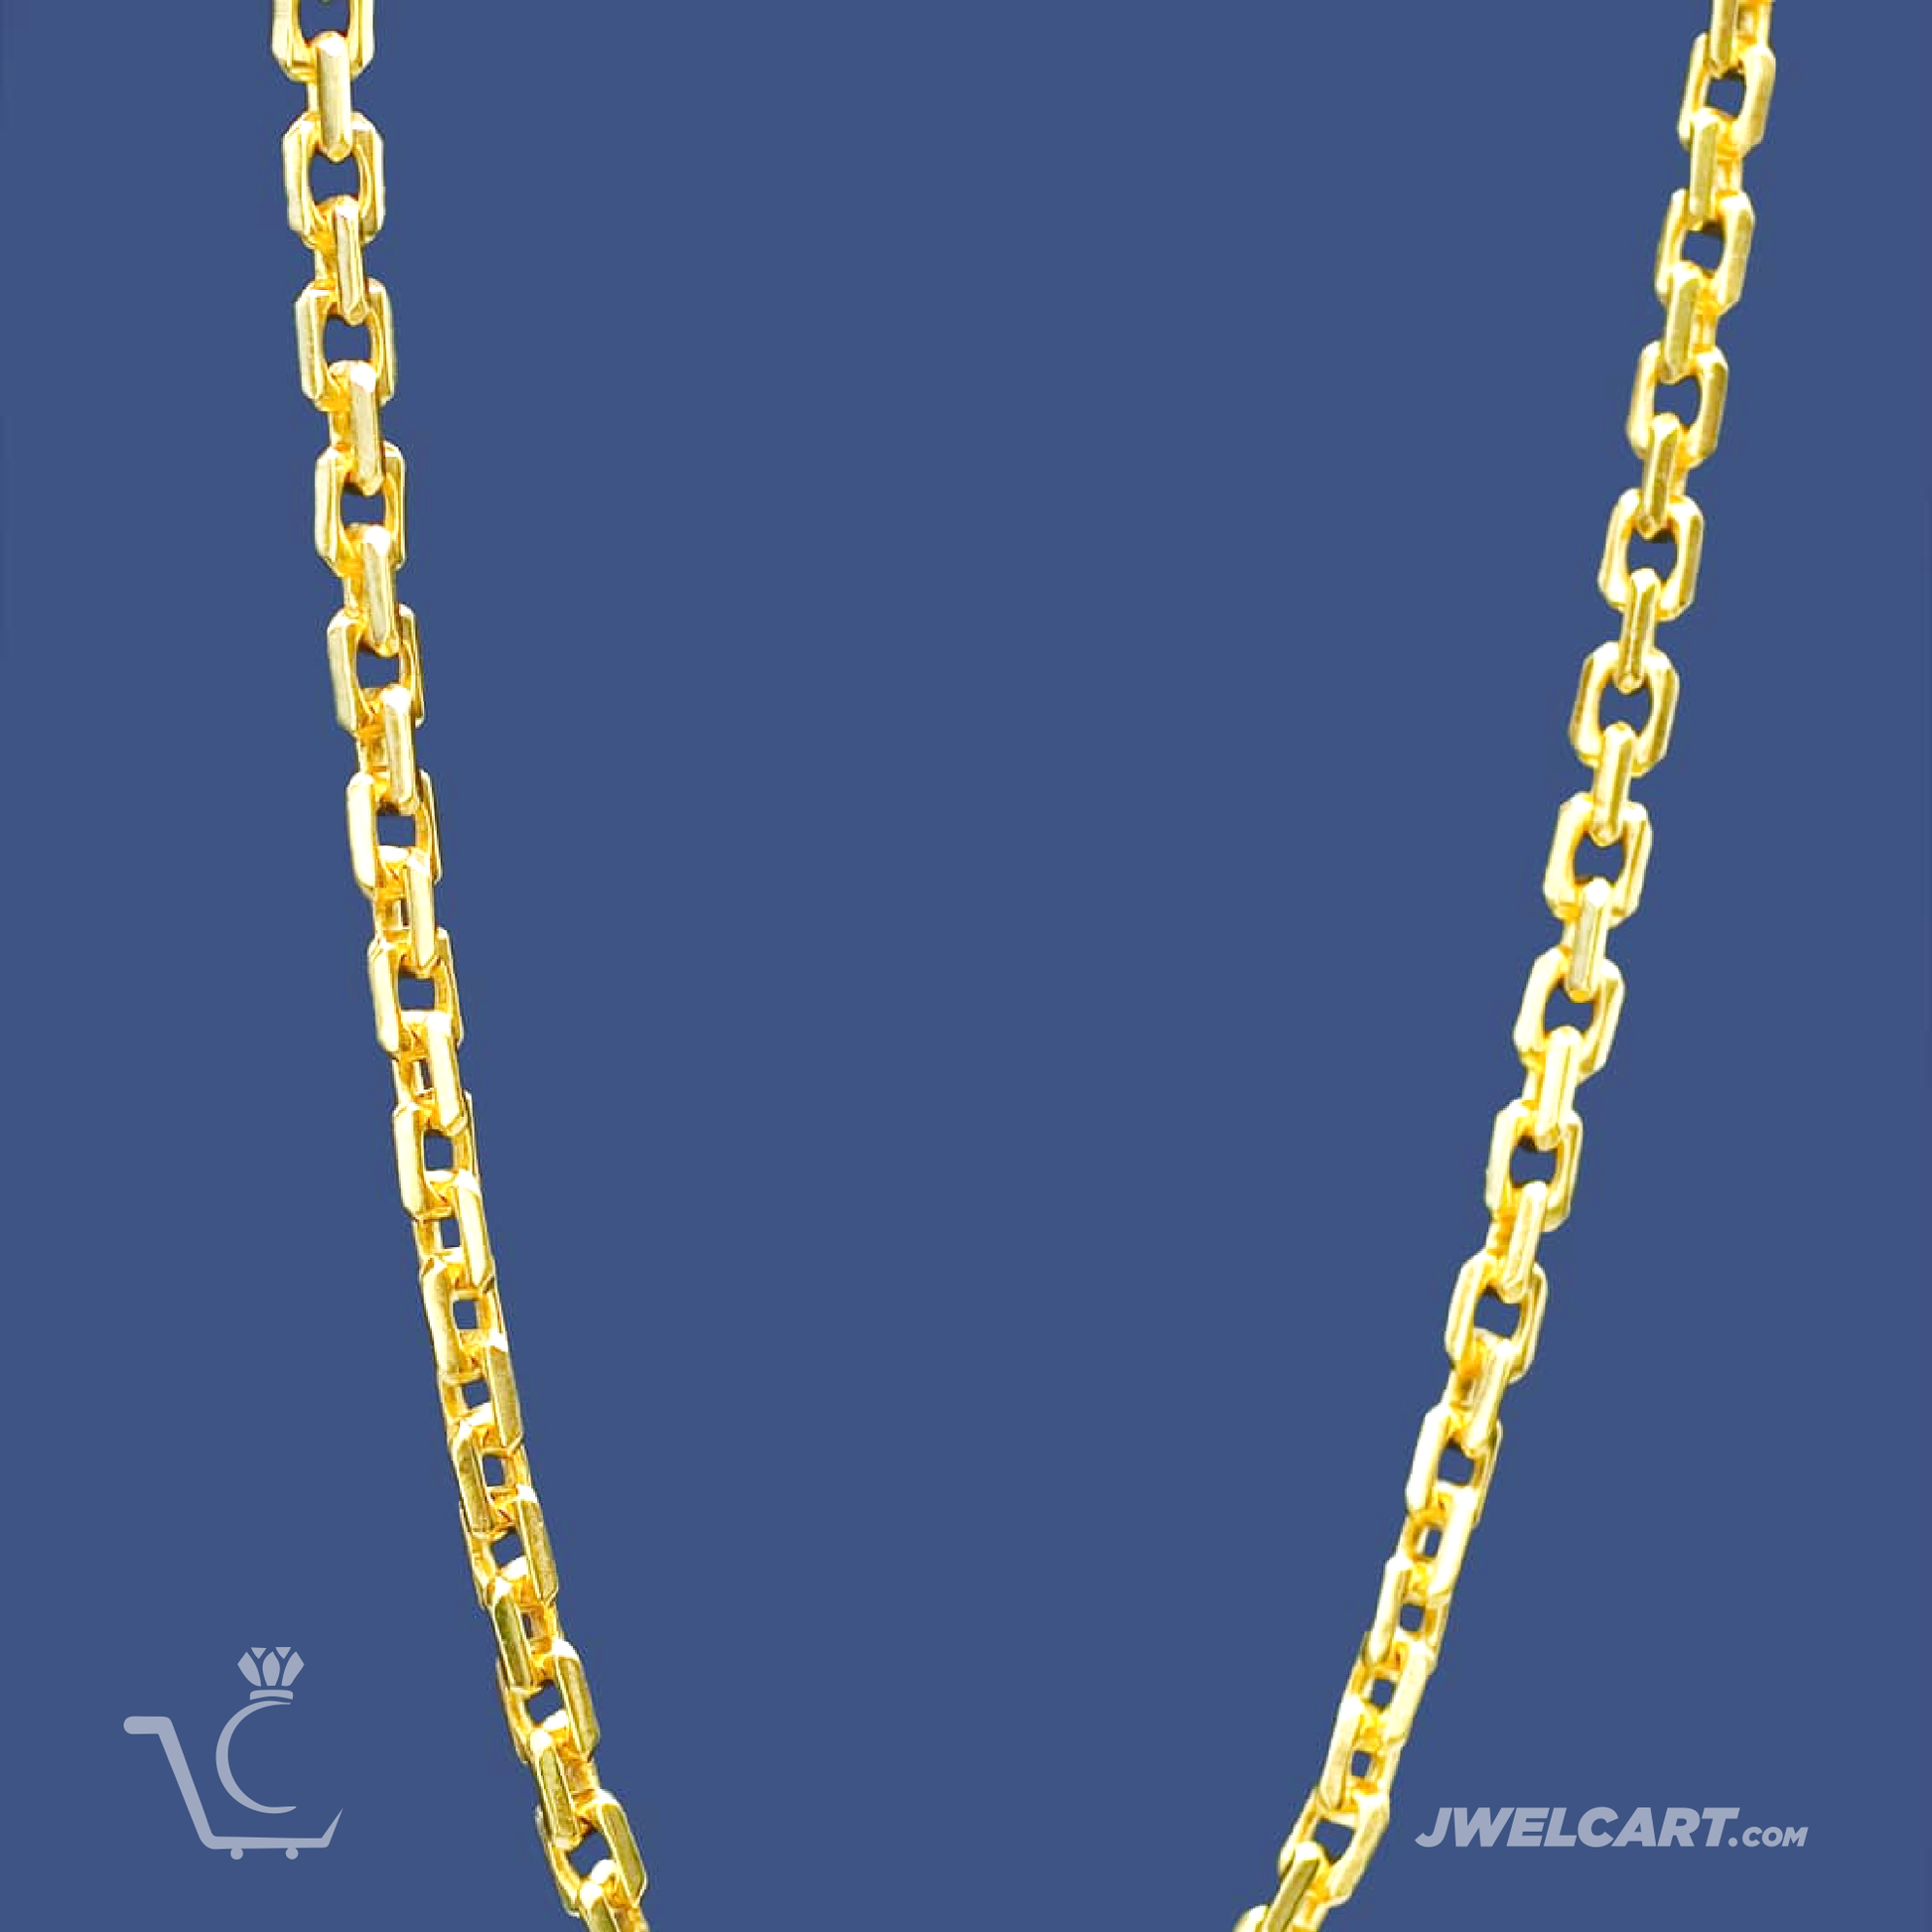 gold link chains jwelcart.com